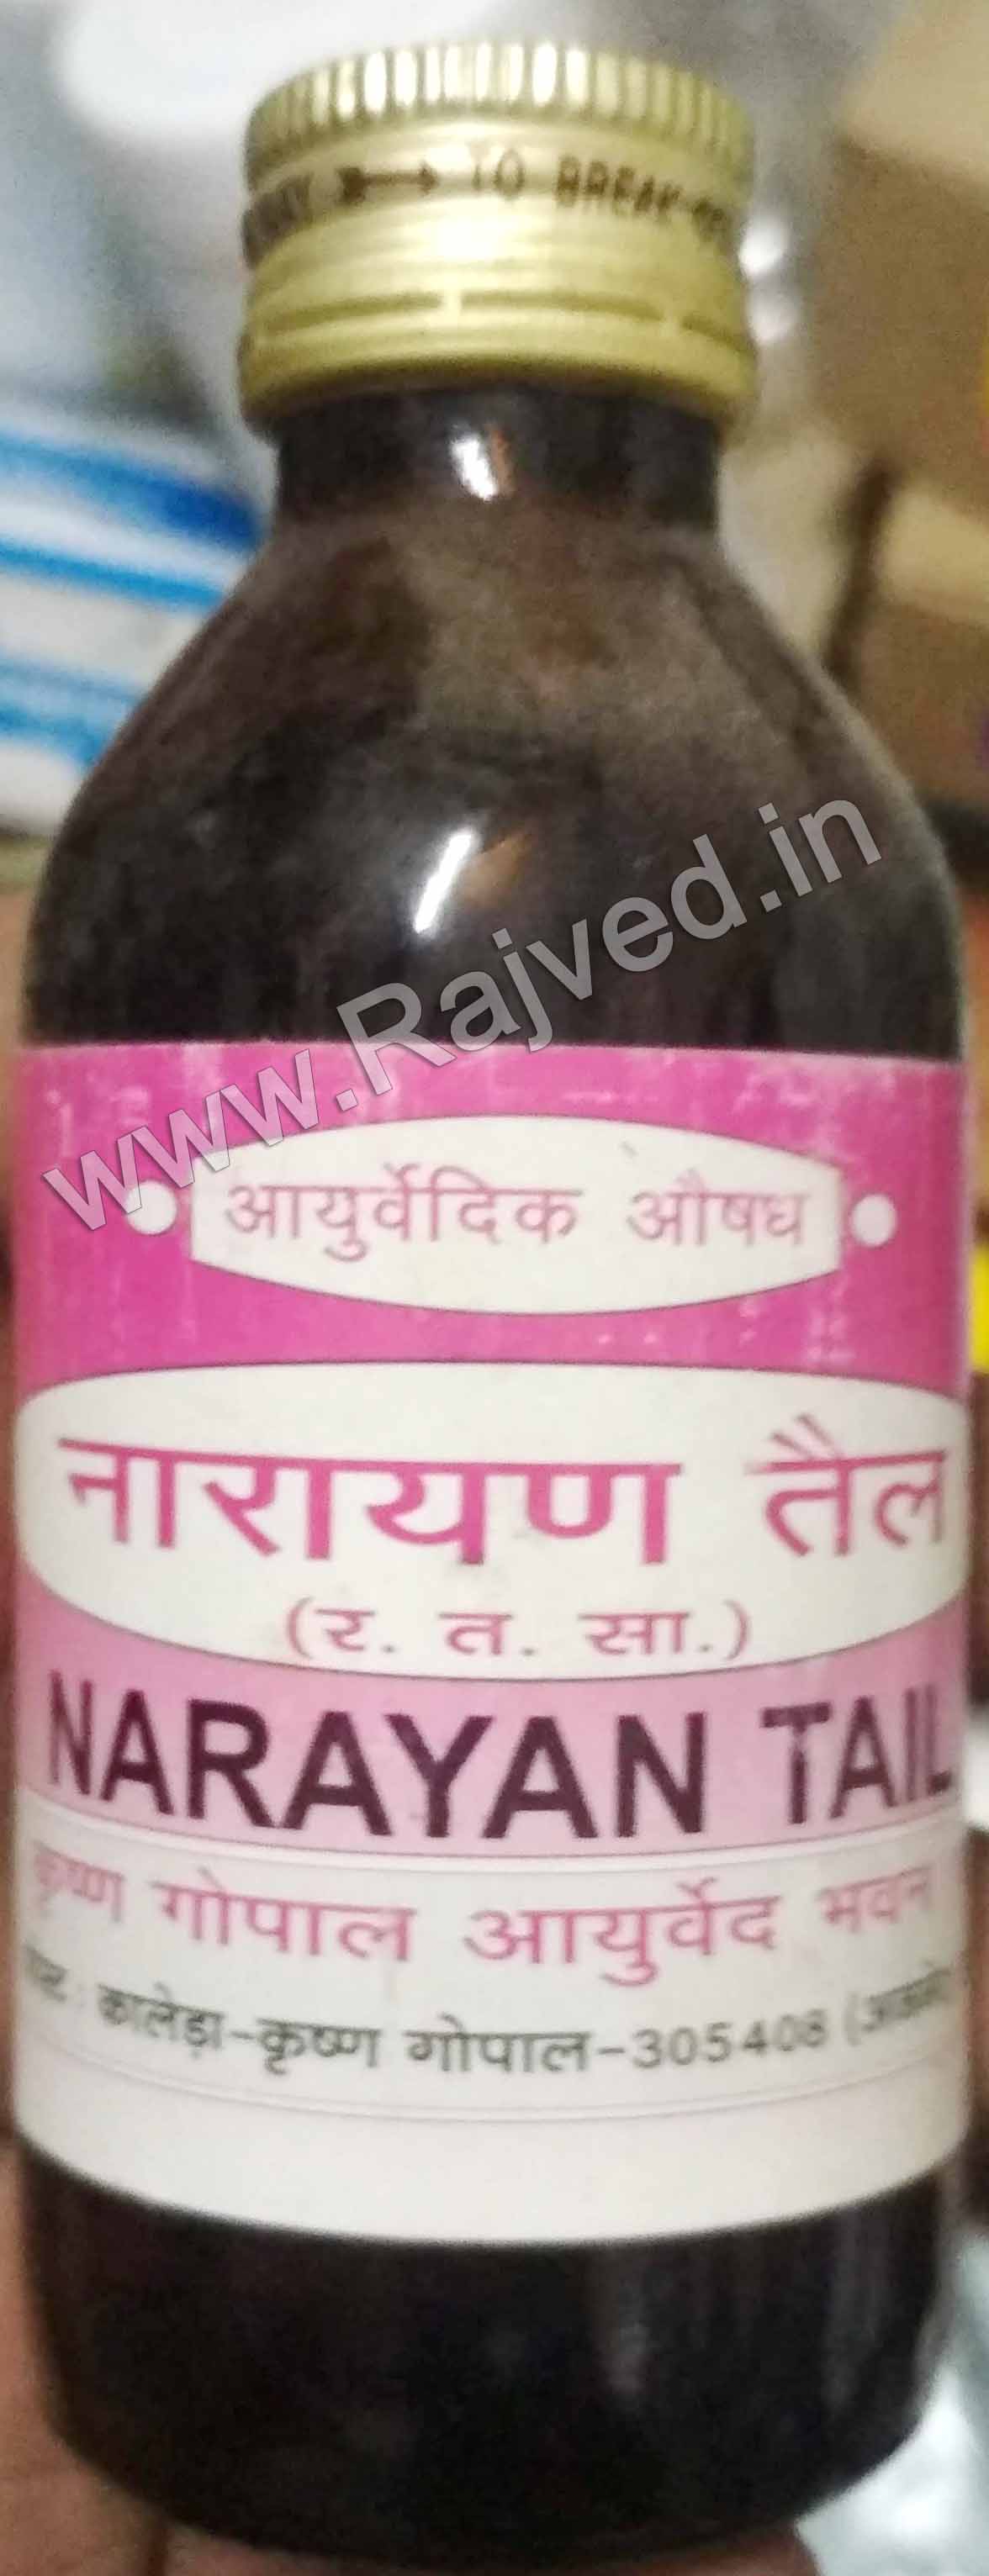 narayan tail 100ml krishna gopal ayurved bhavan